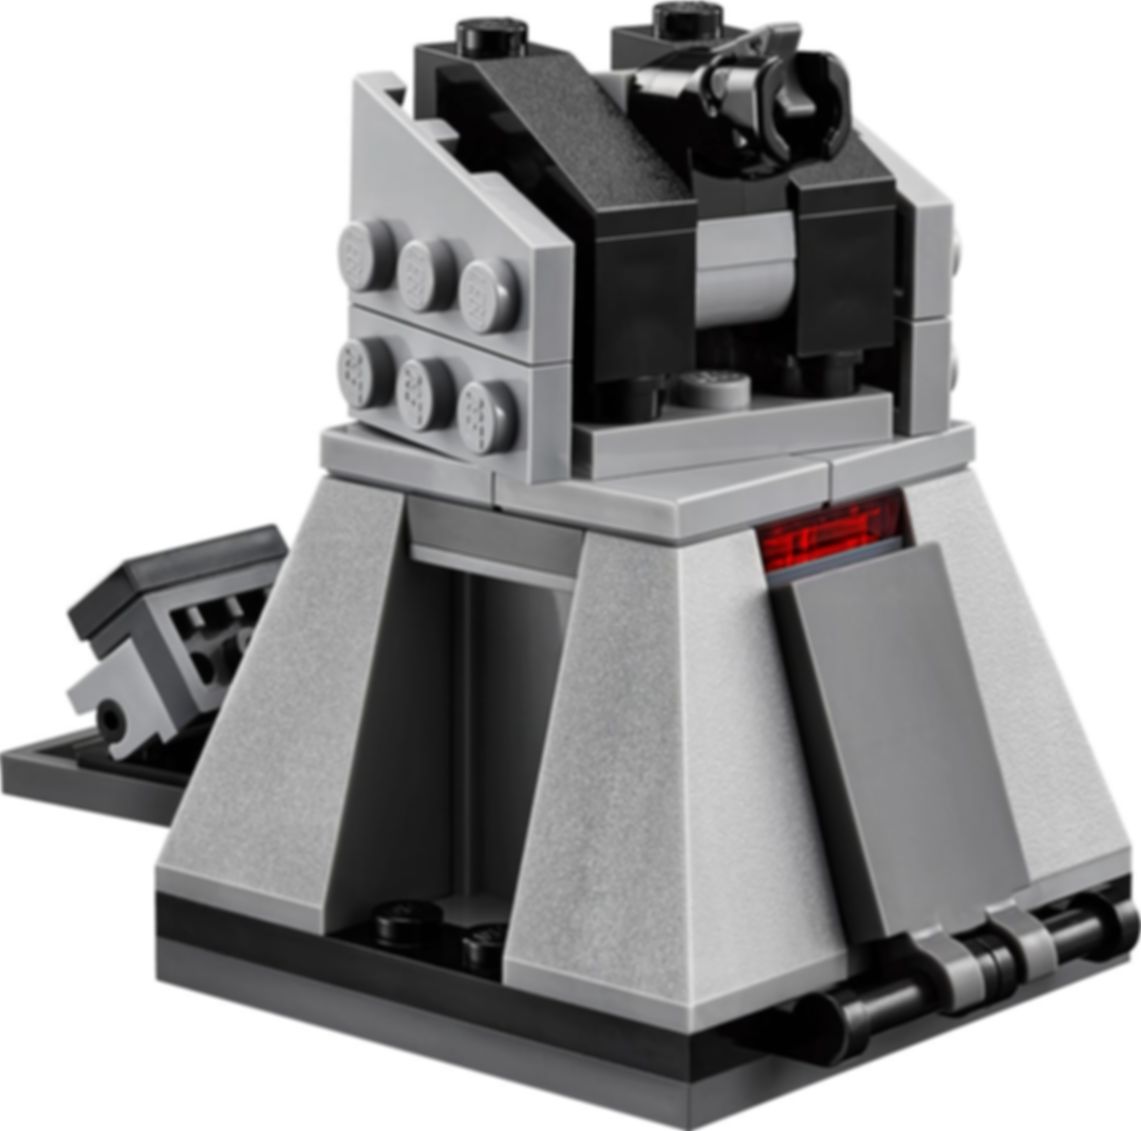 LEGO® Star Wars First Order Battle Pack komponenten